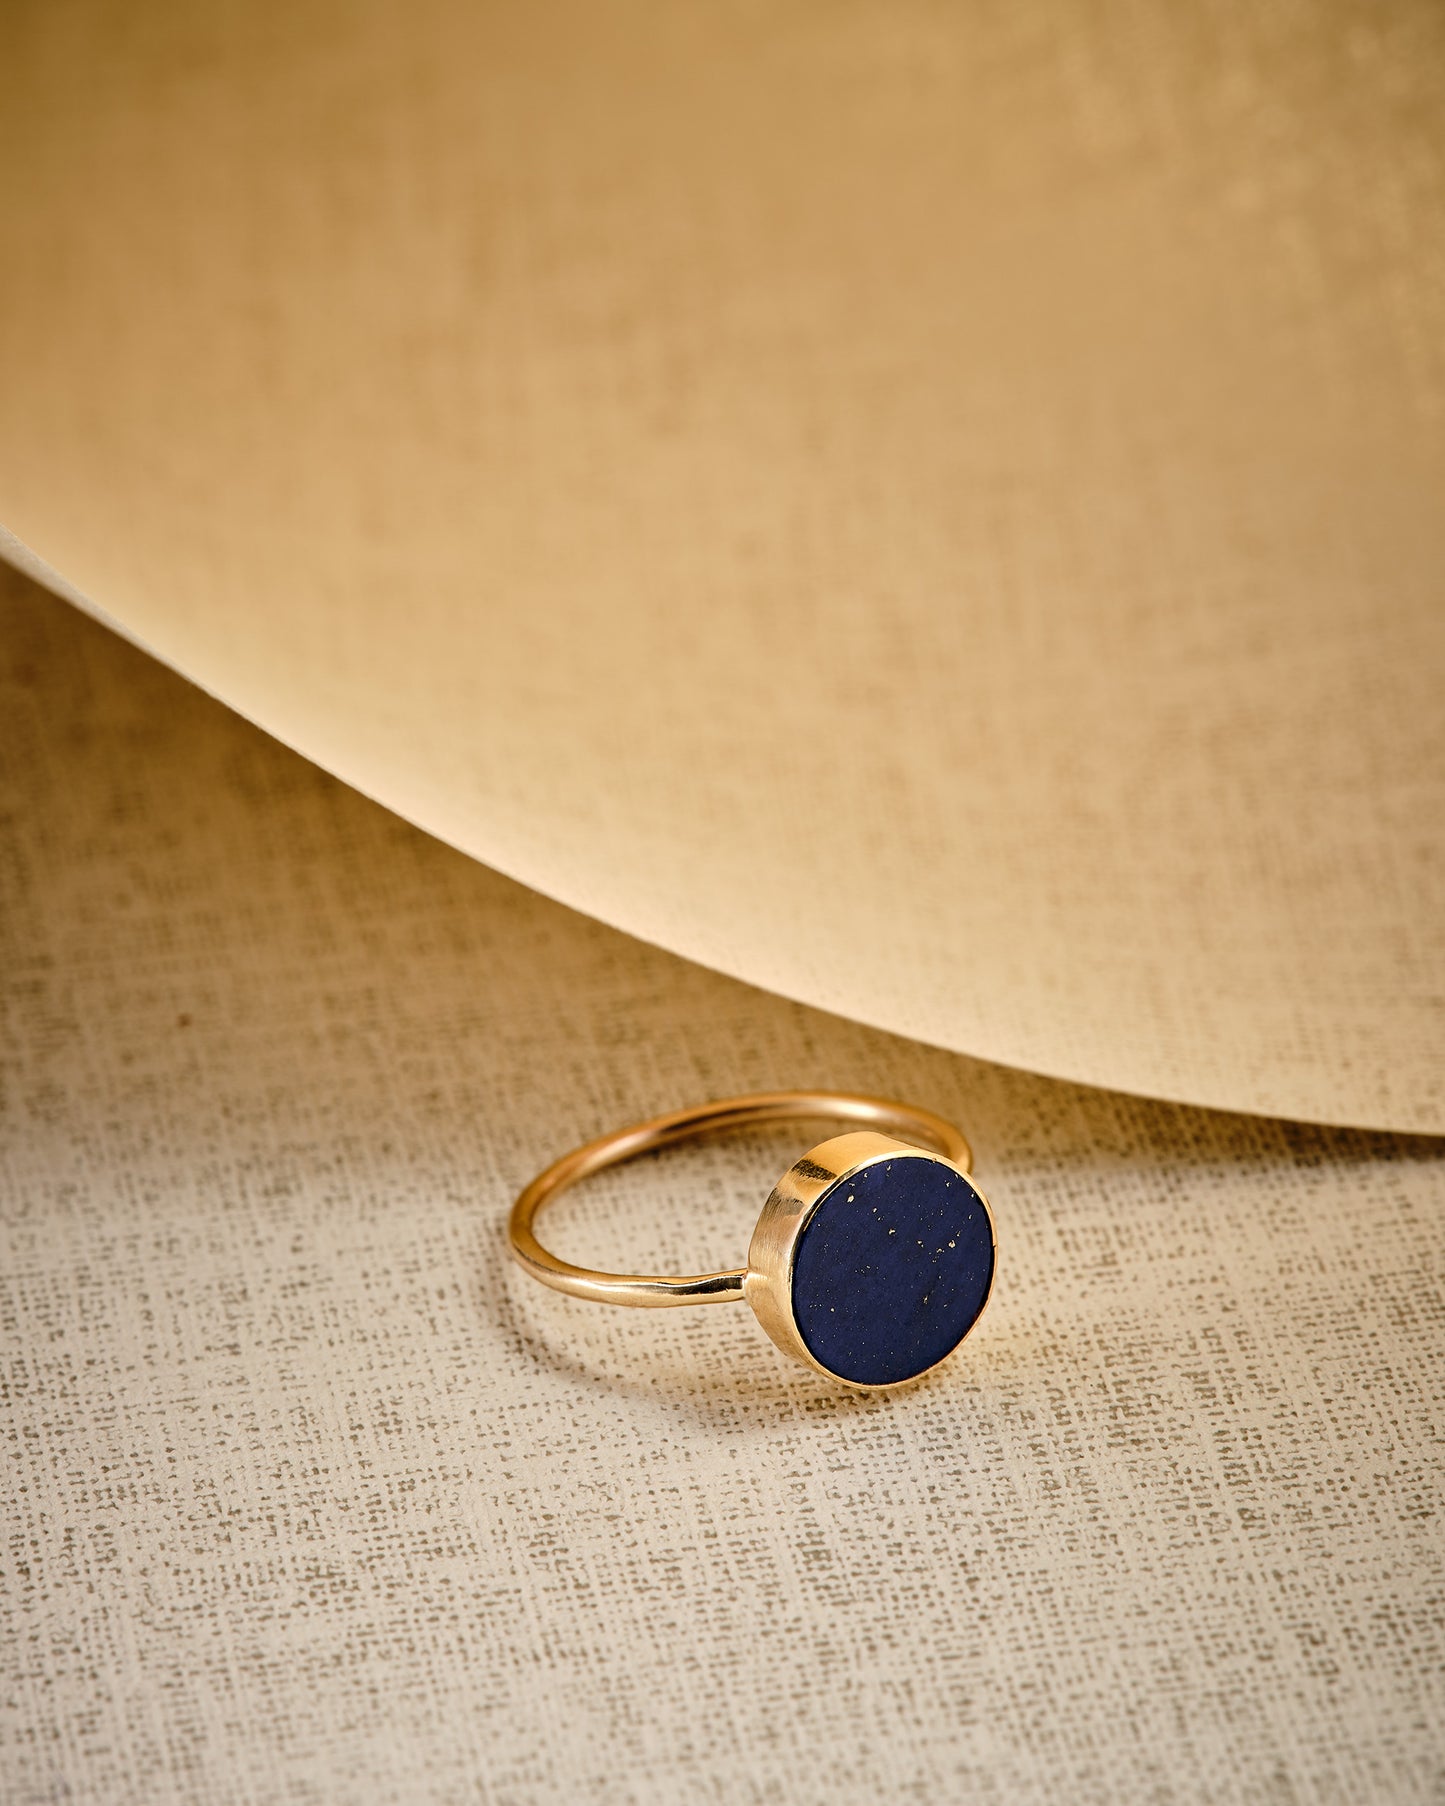 Stellar blue lapis lazuli gold disc ring with beige background